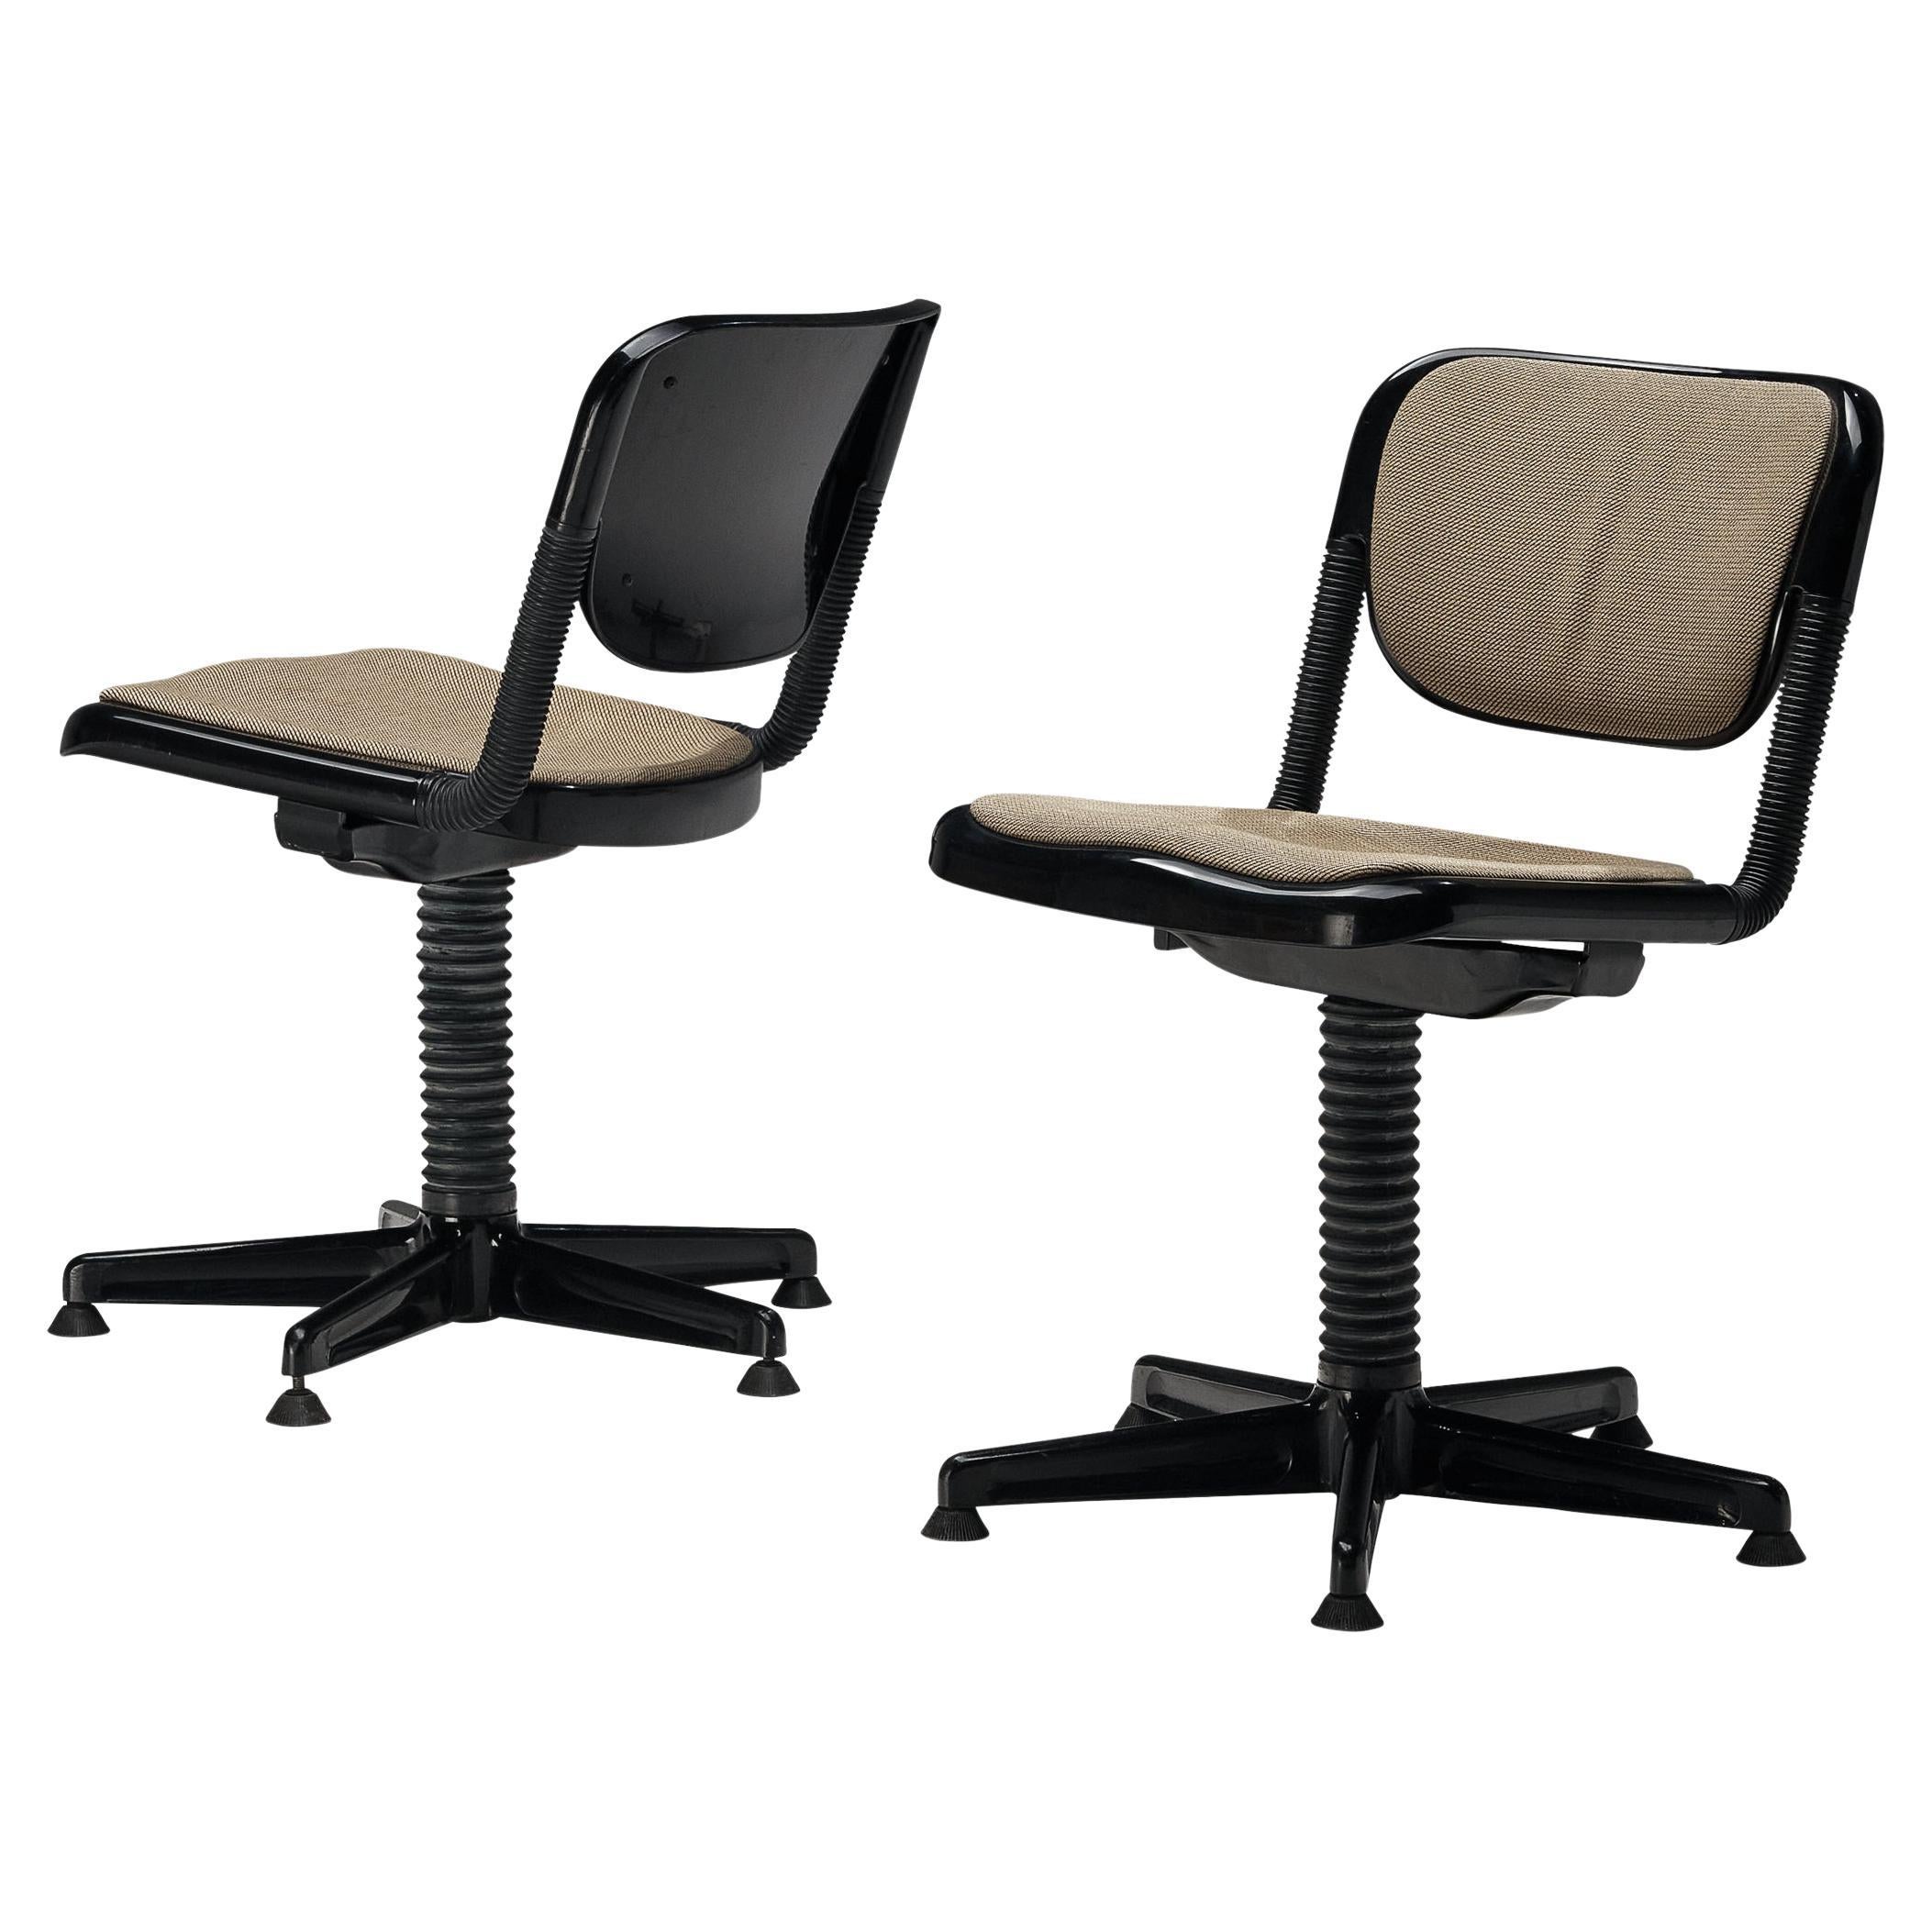 Emilio Ambasz & Giancarlo Piretti Desk Chairs